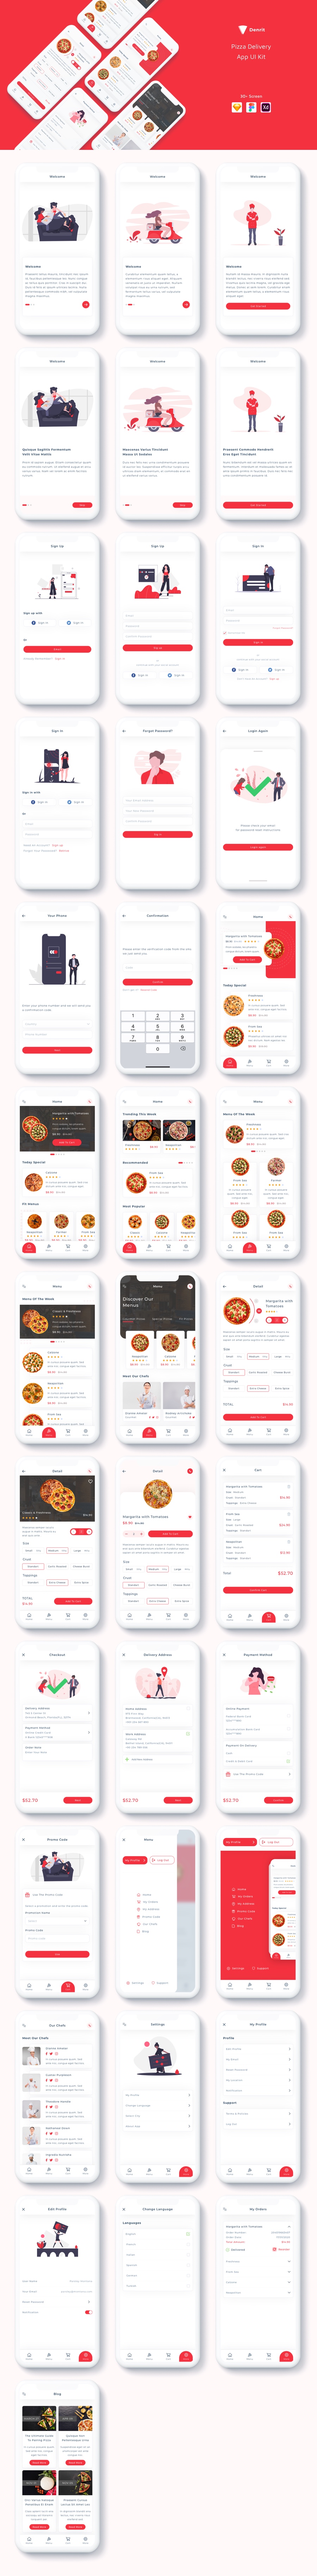 Denrit - Pizza Delivery App UI Kit - 1